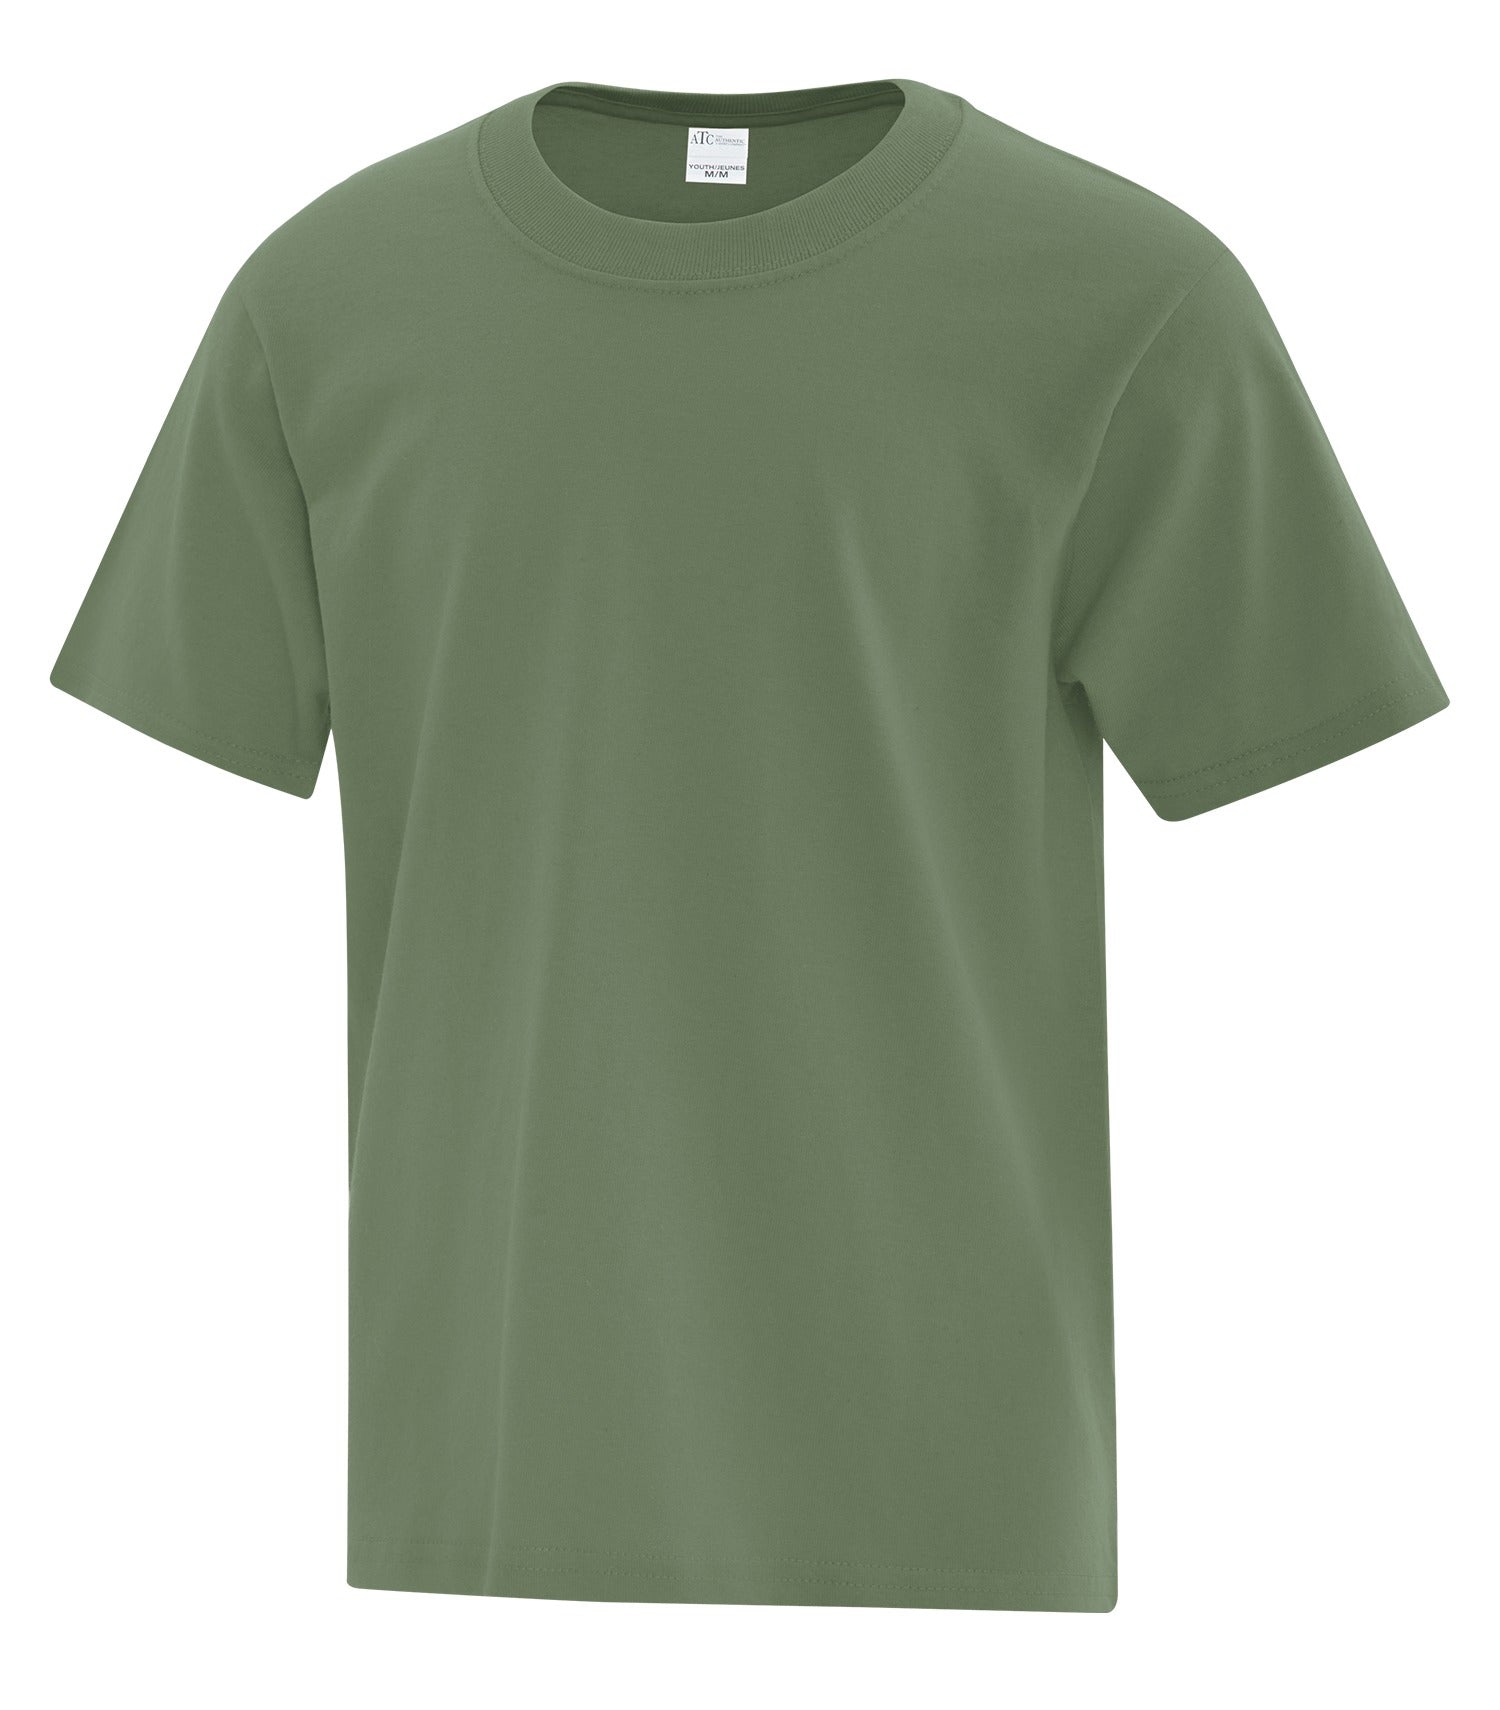 Green cotton tshirt